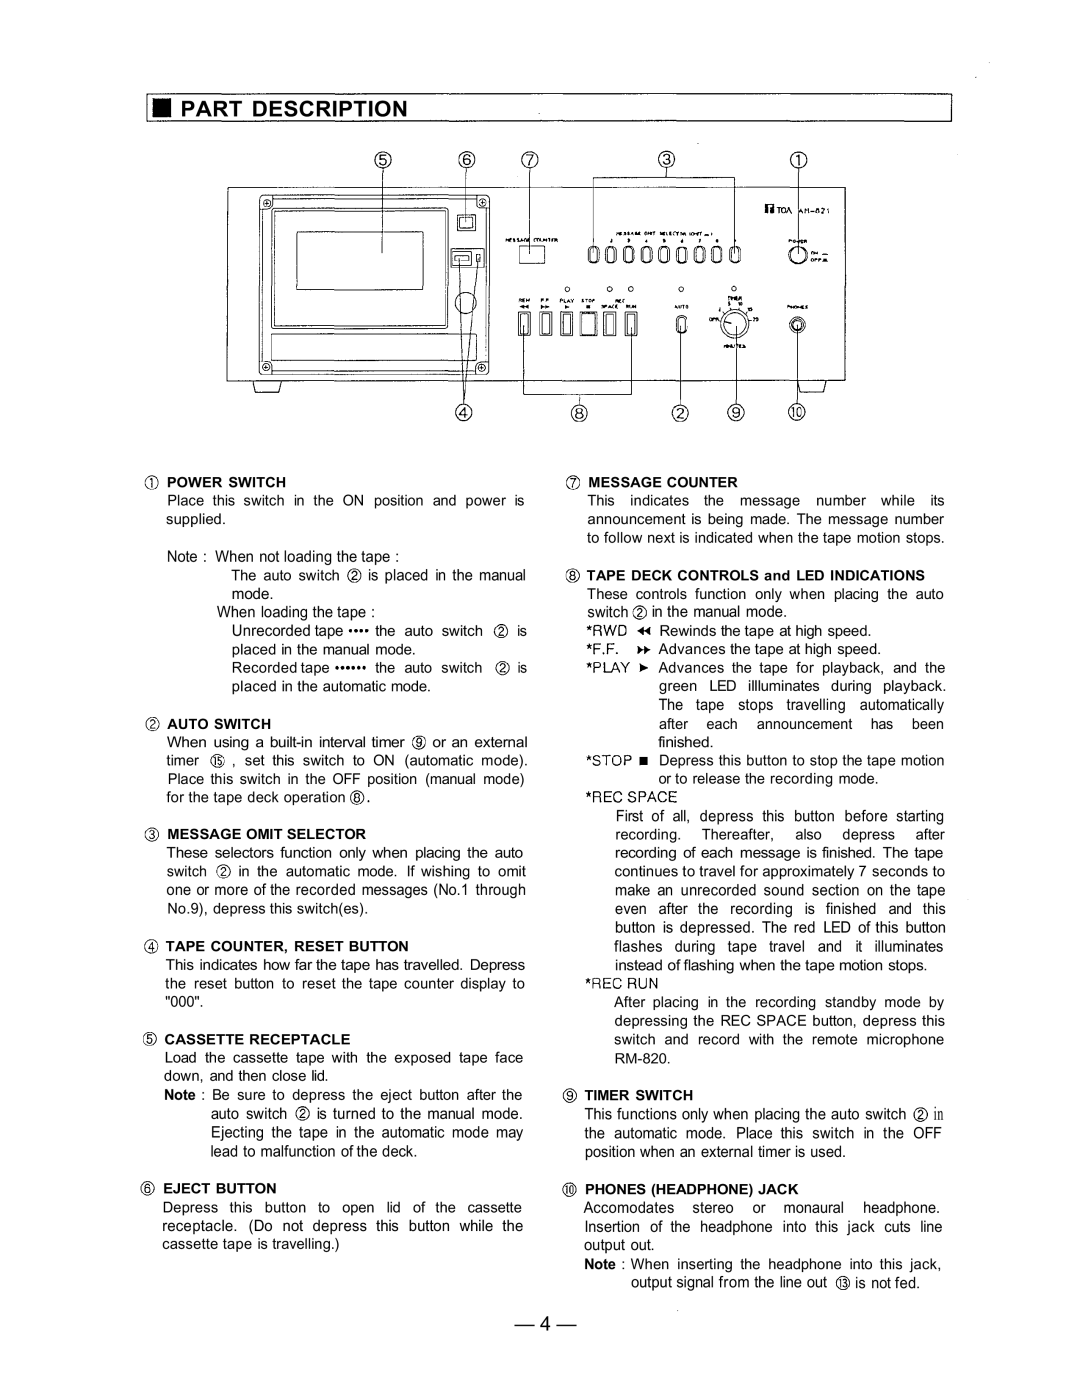 TOA Electronics AM-821 instruction manual Part Description 